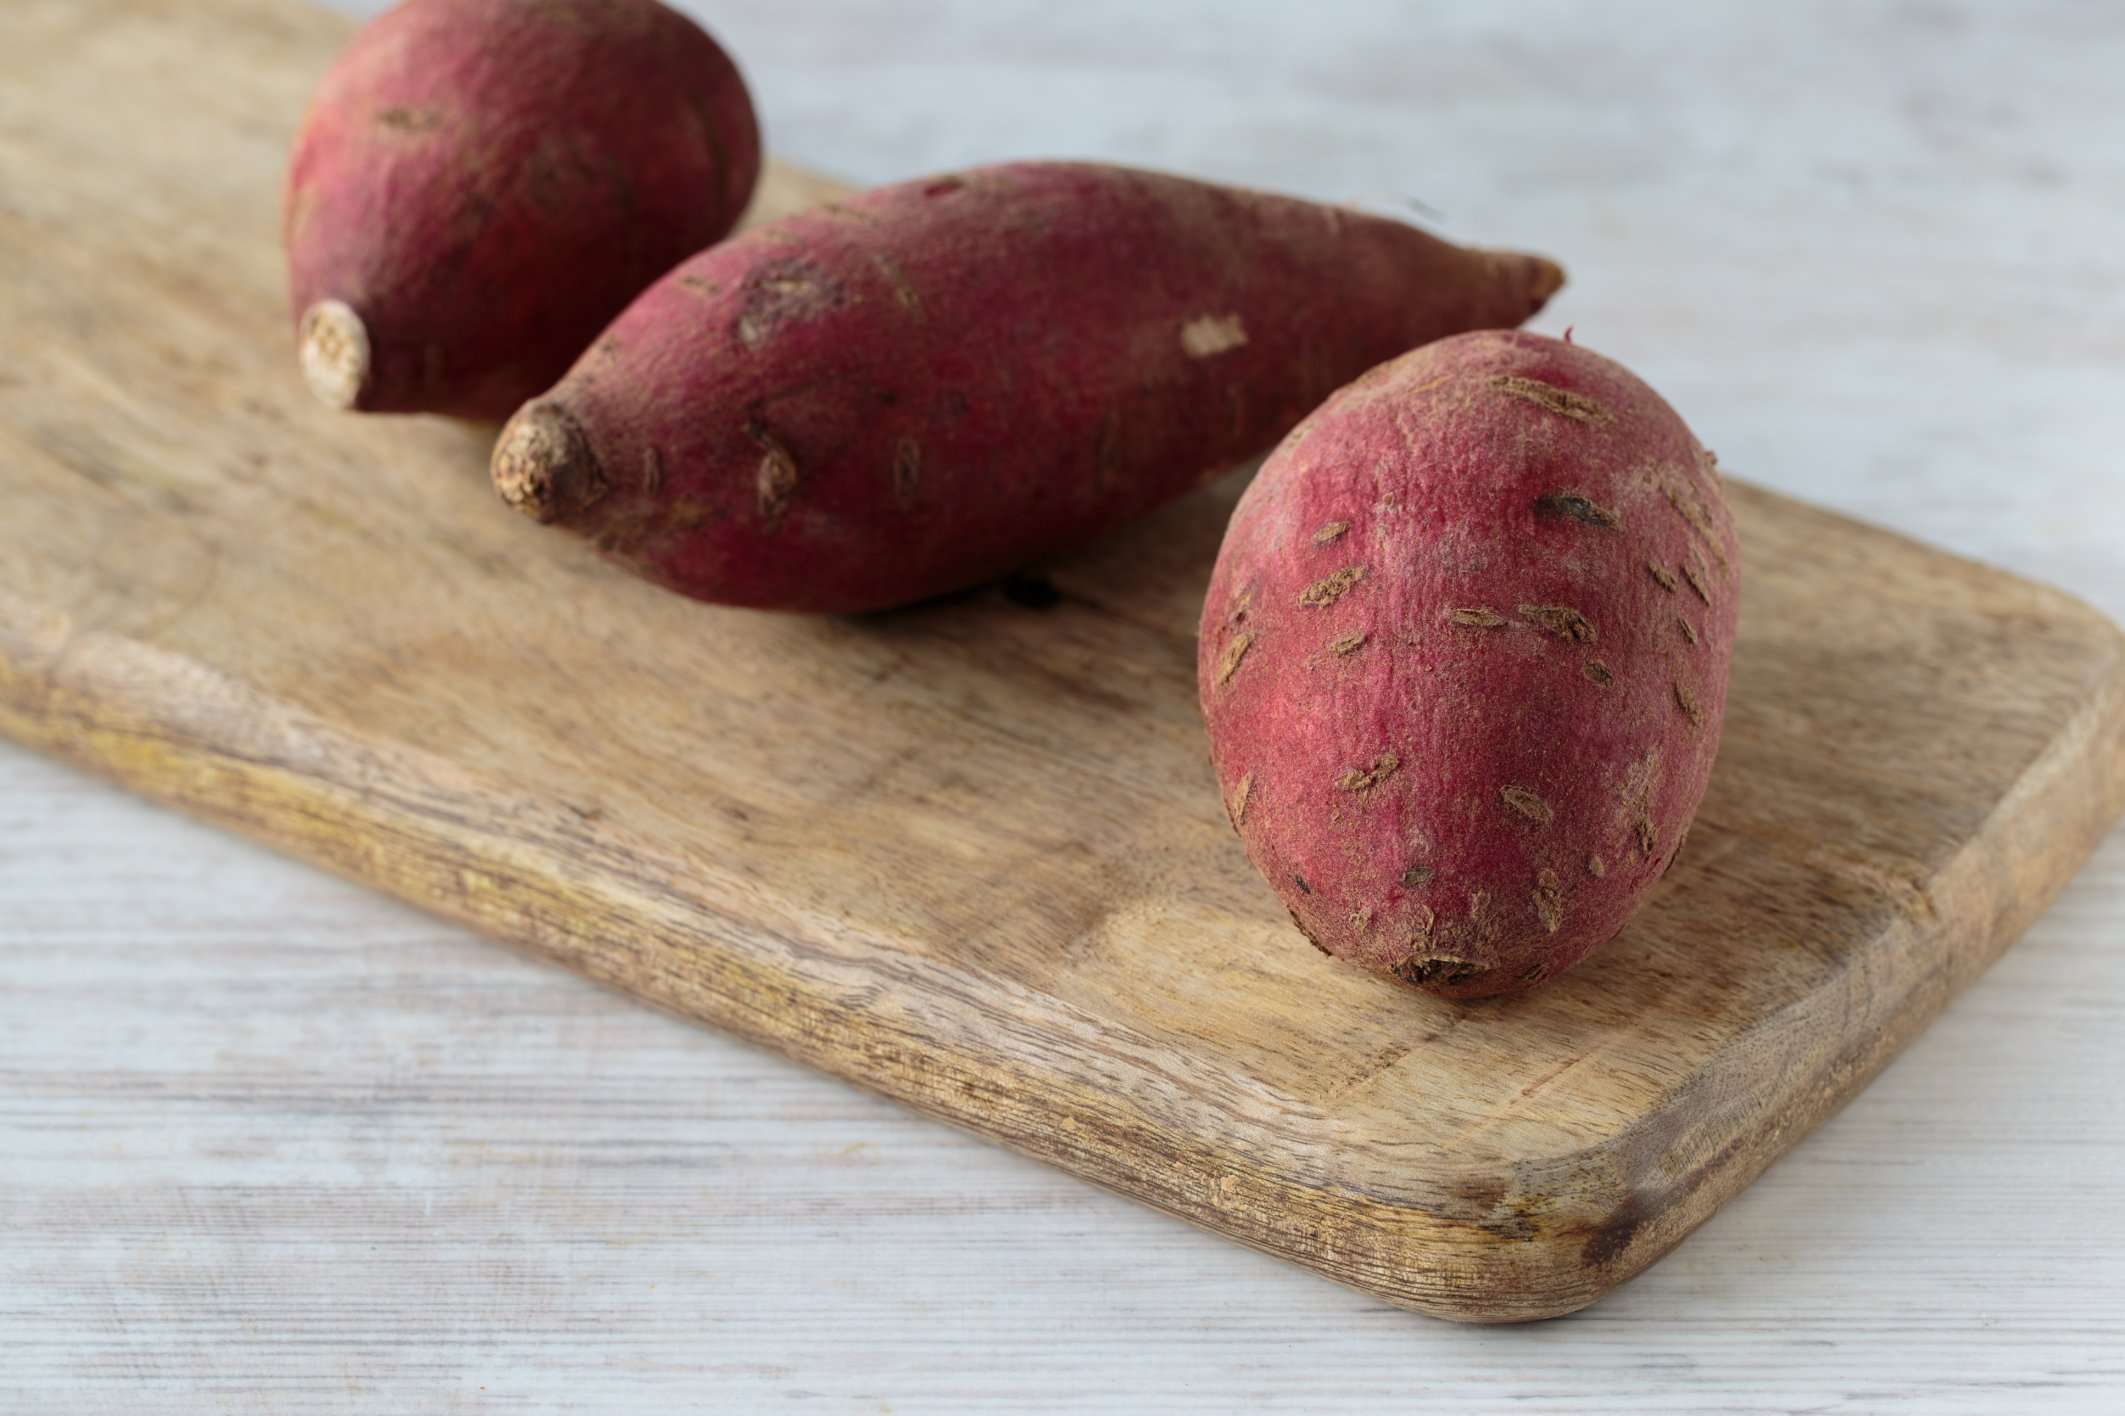 Do Sweet Potatoes Raise Cholesterol Levels?